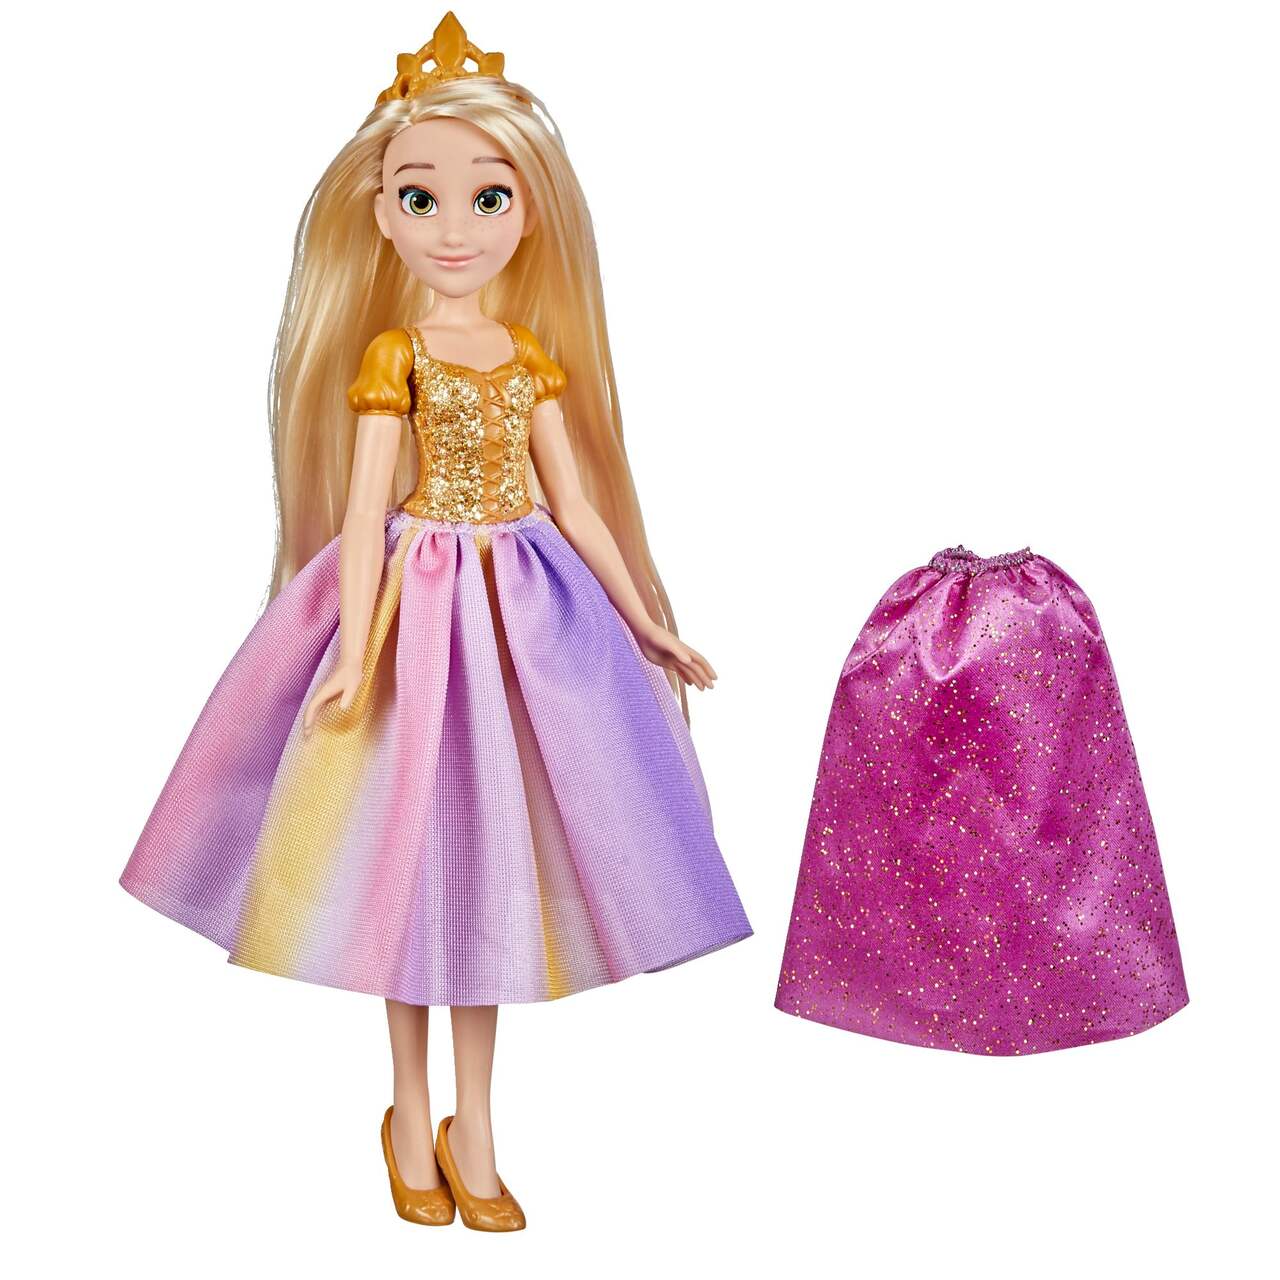 Disney Princess Secret Styles Magic Glitter Wand Doll, Assorted